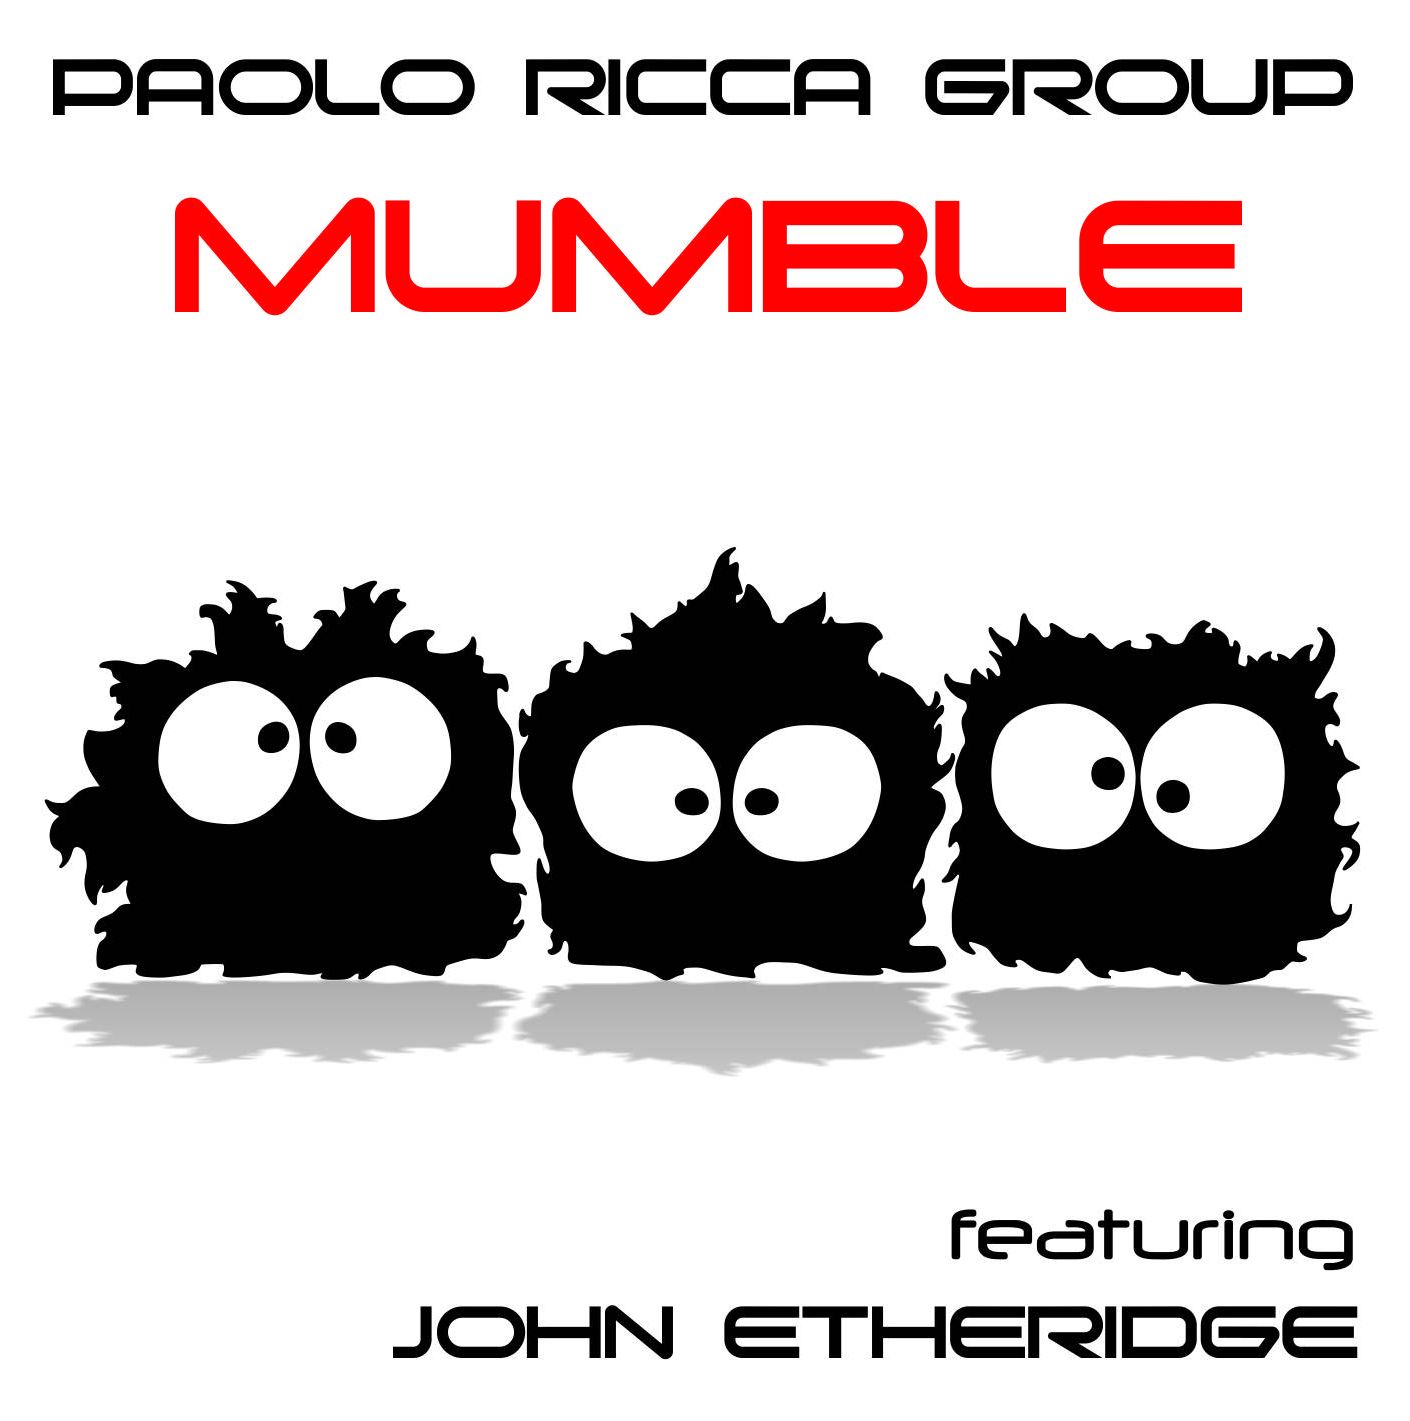 PAOLO RICCA GROUP - Mumble Featuring John Etheridge CD